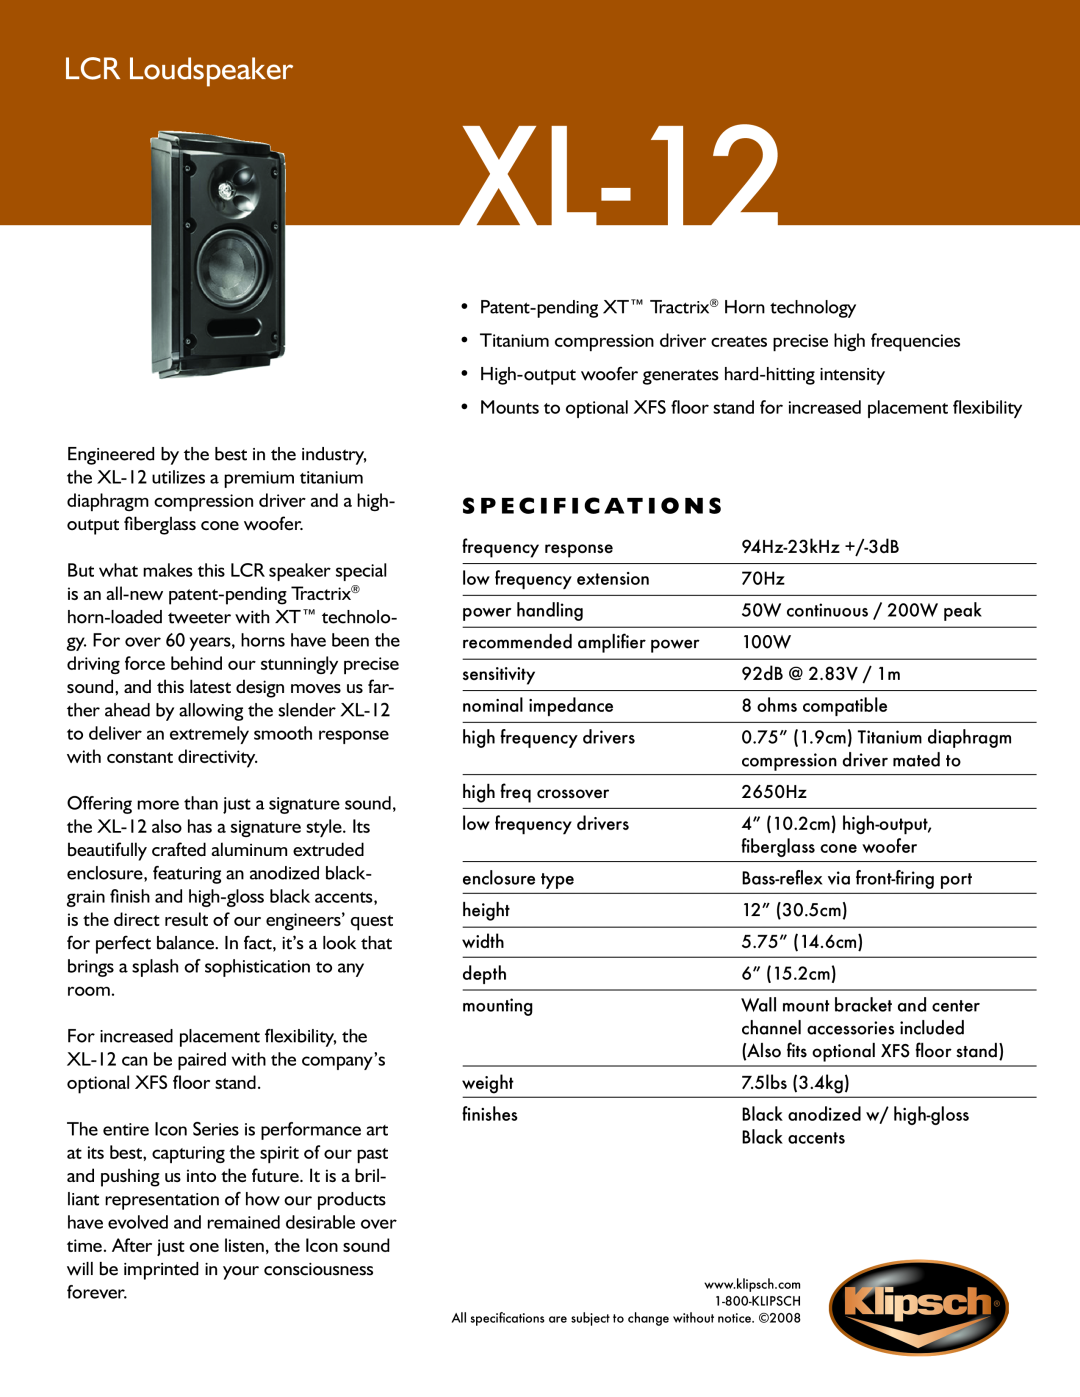 Klipsch XL-12 specifications LCR Loudspeaker, S p e c i f i c a t i o n s 